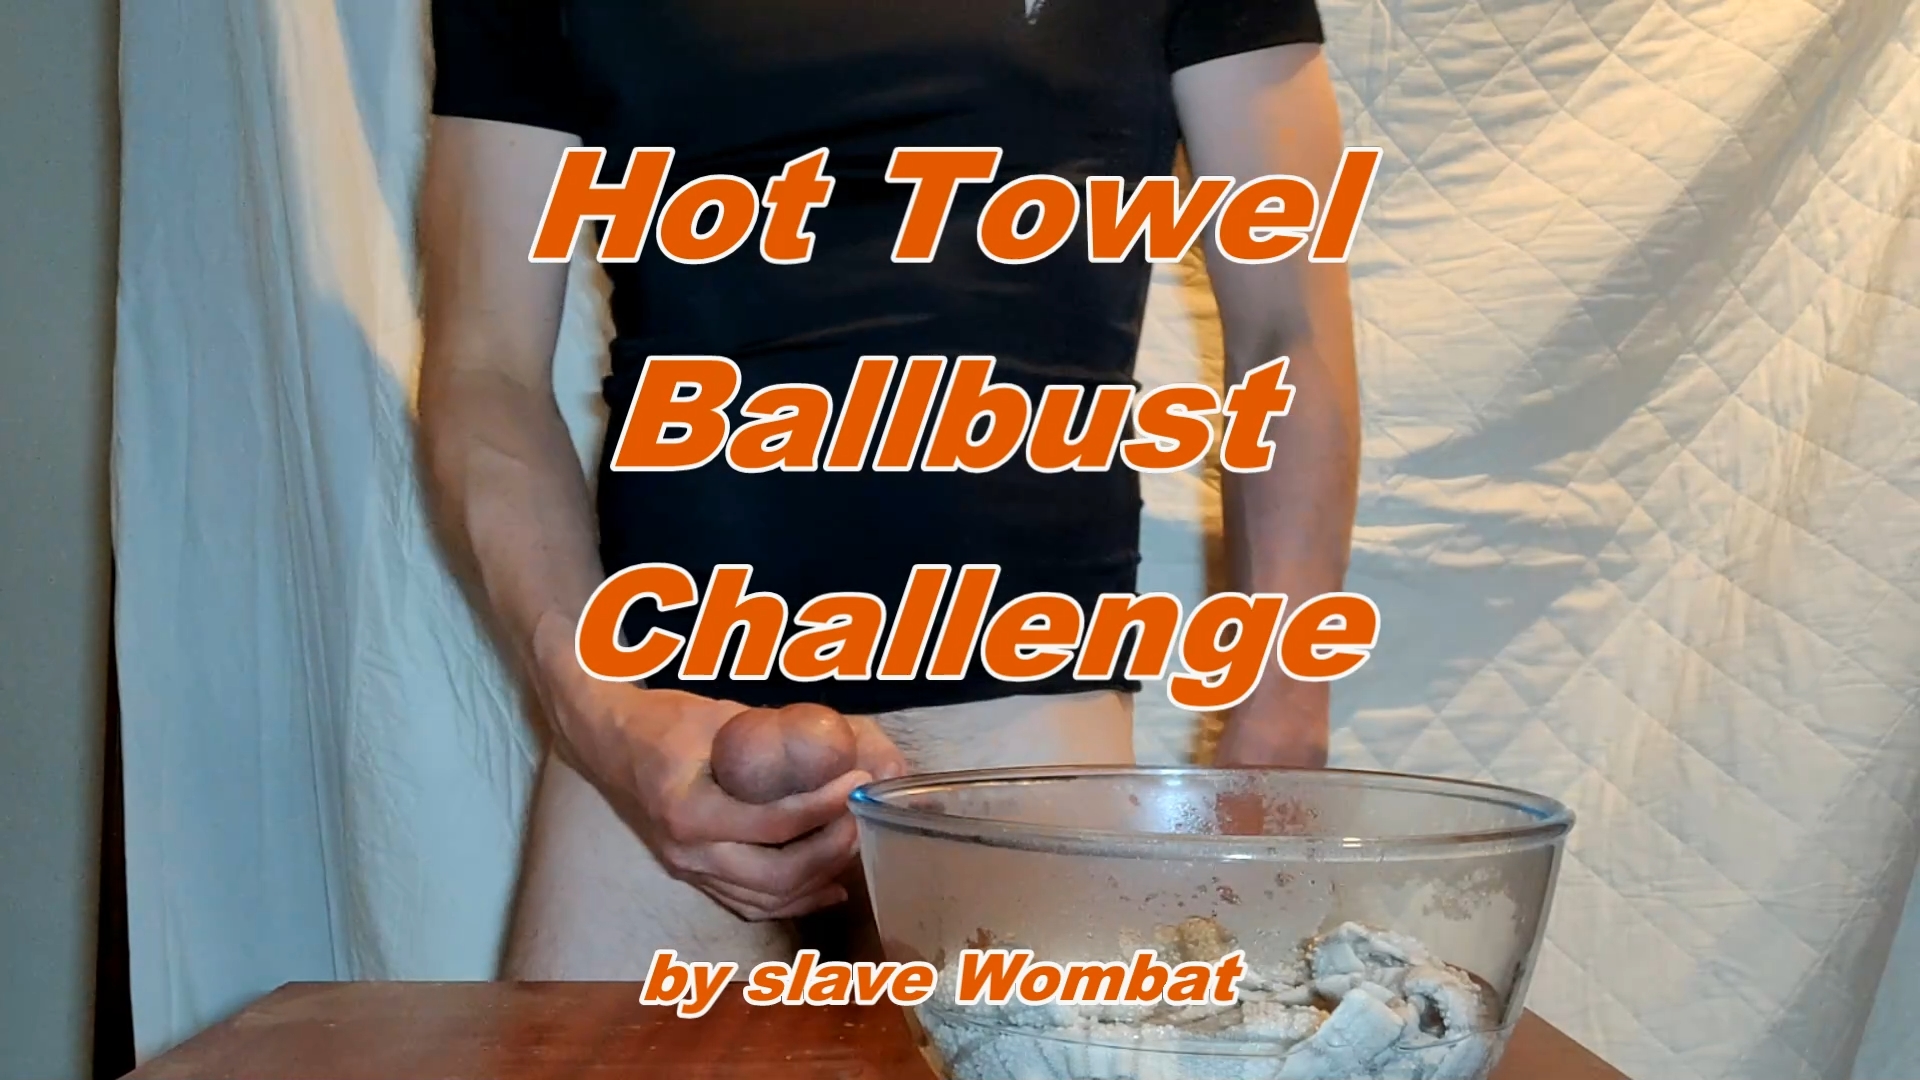 Hot Towel Ballbust challenge by slave Wombat